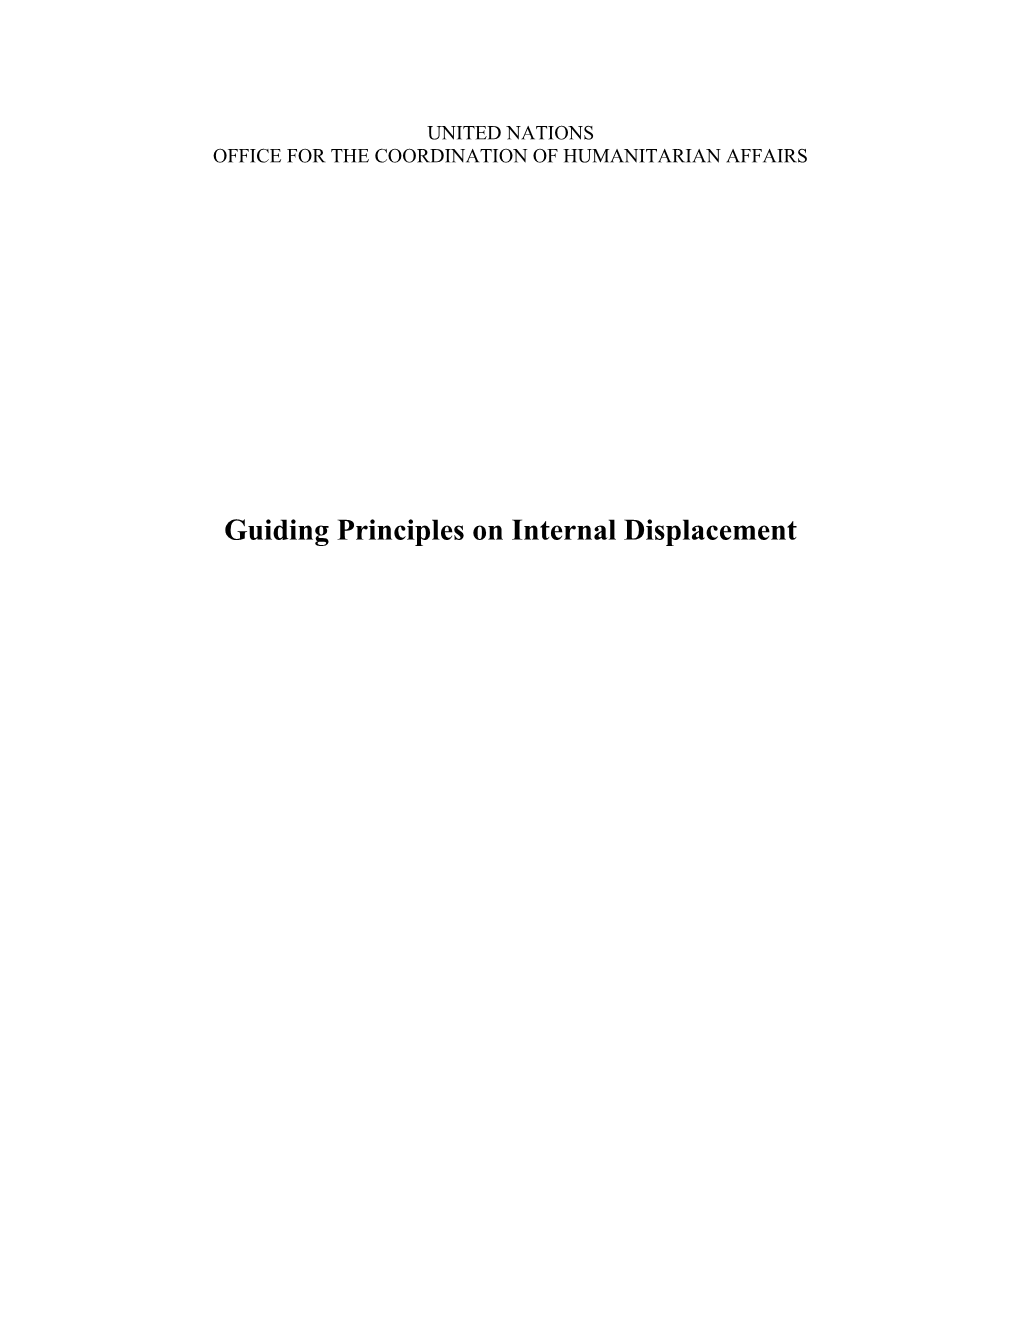 Guiding Principles on Internal Displacement